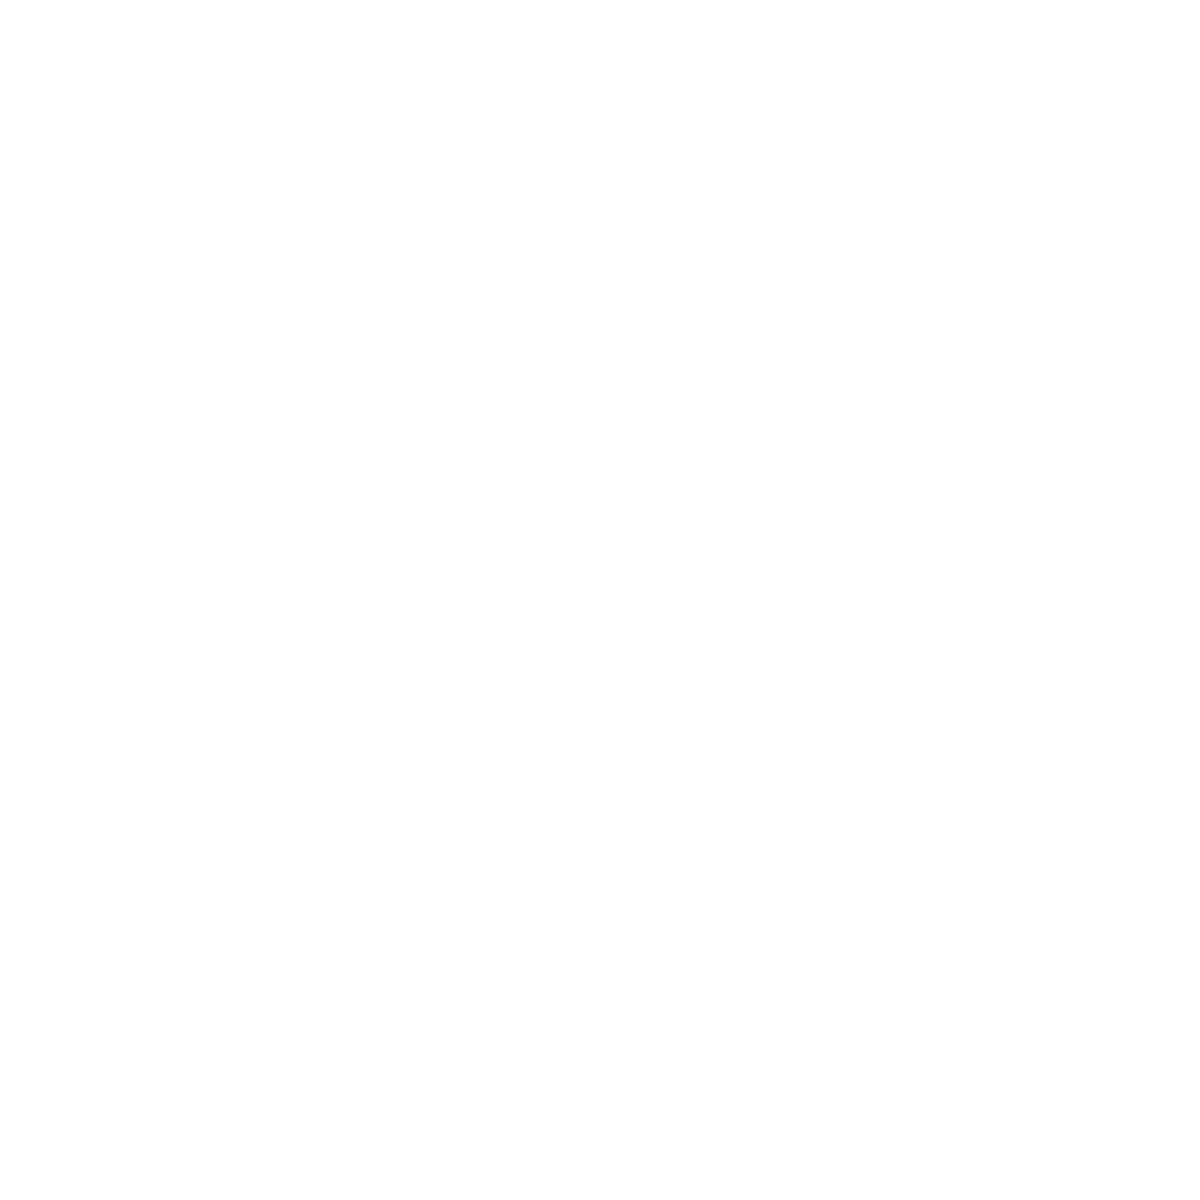 Download File:Nankai mainline symbol no border.svg - Wikimedia Commons